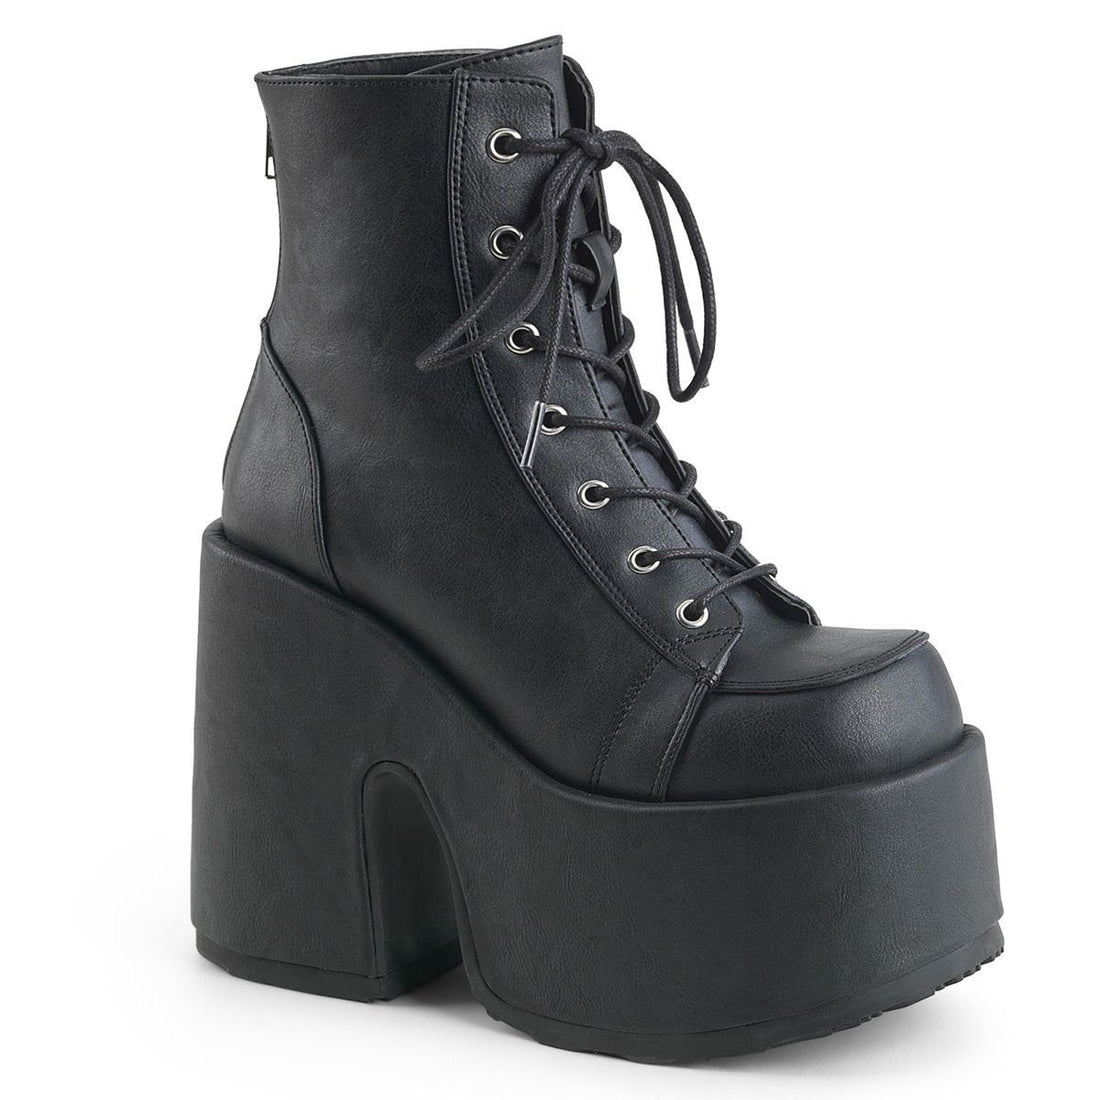 Demonia Camel 203 Black Vegan Leather Platform Ankle Boots - Upperclass Fashions 